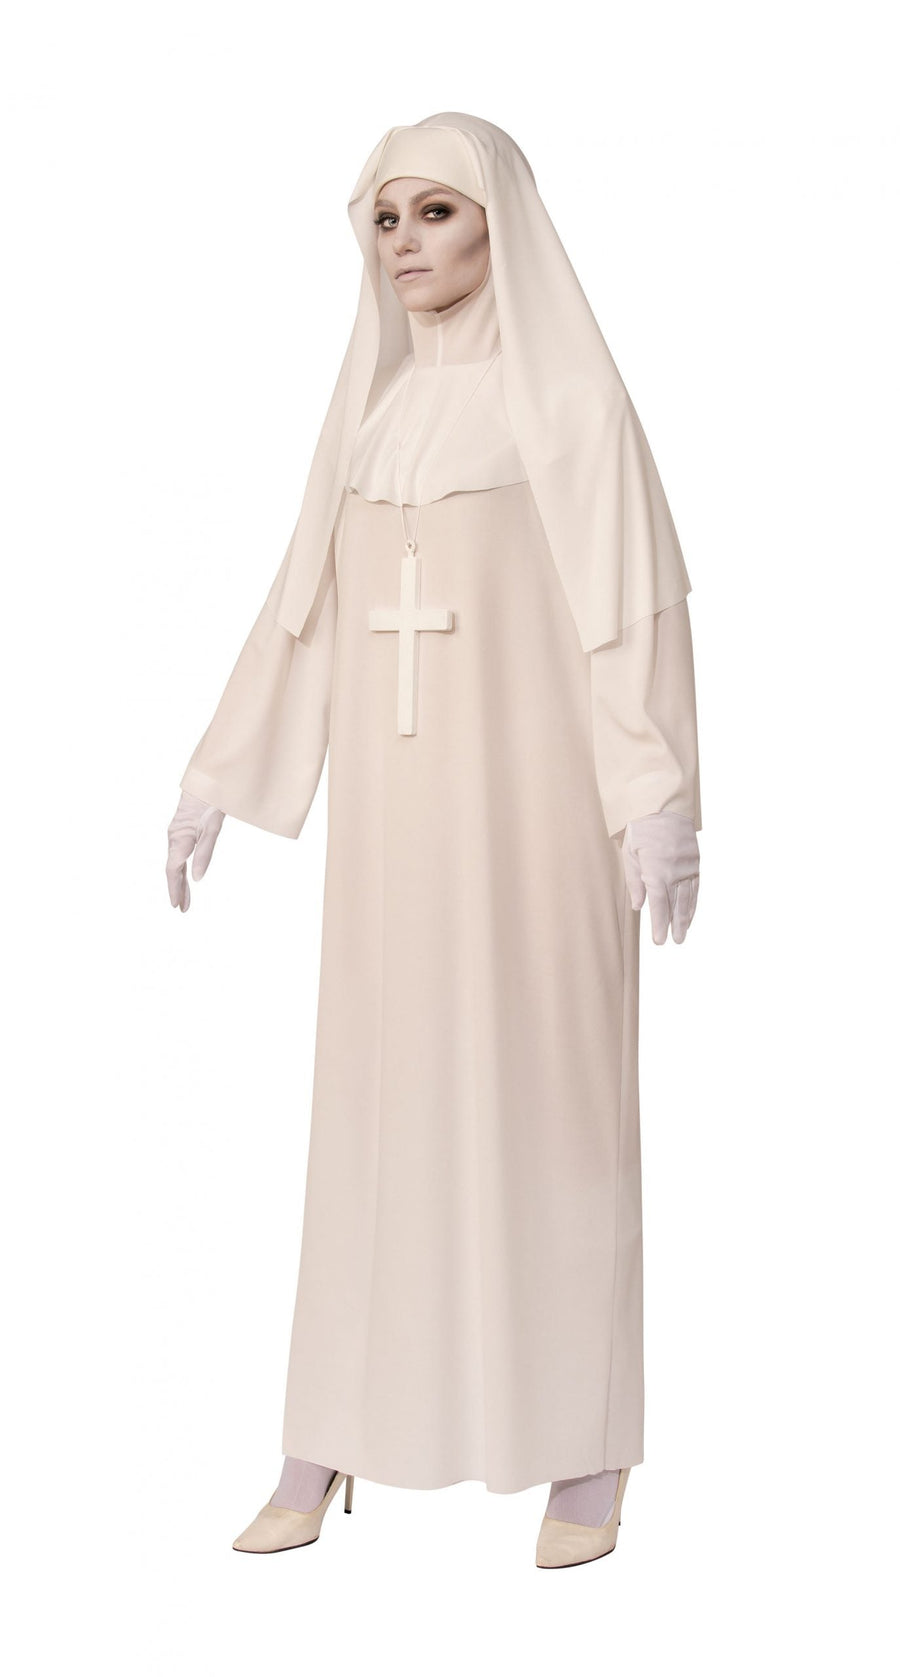 White Nun Medium Adult_1